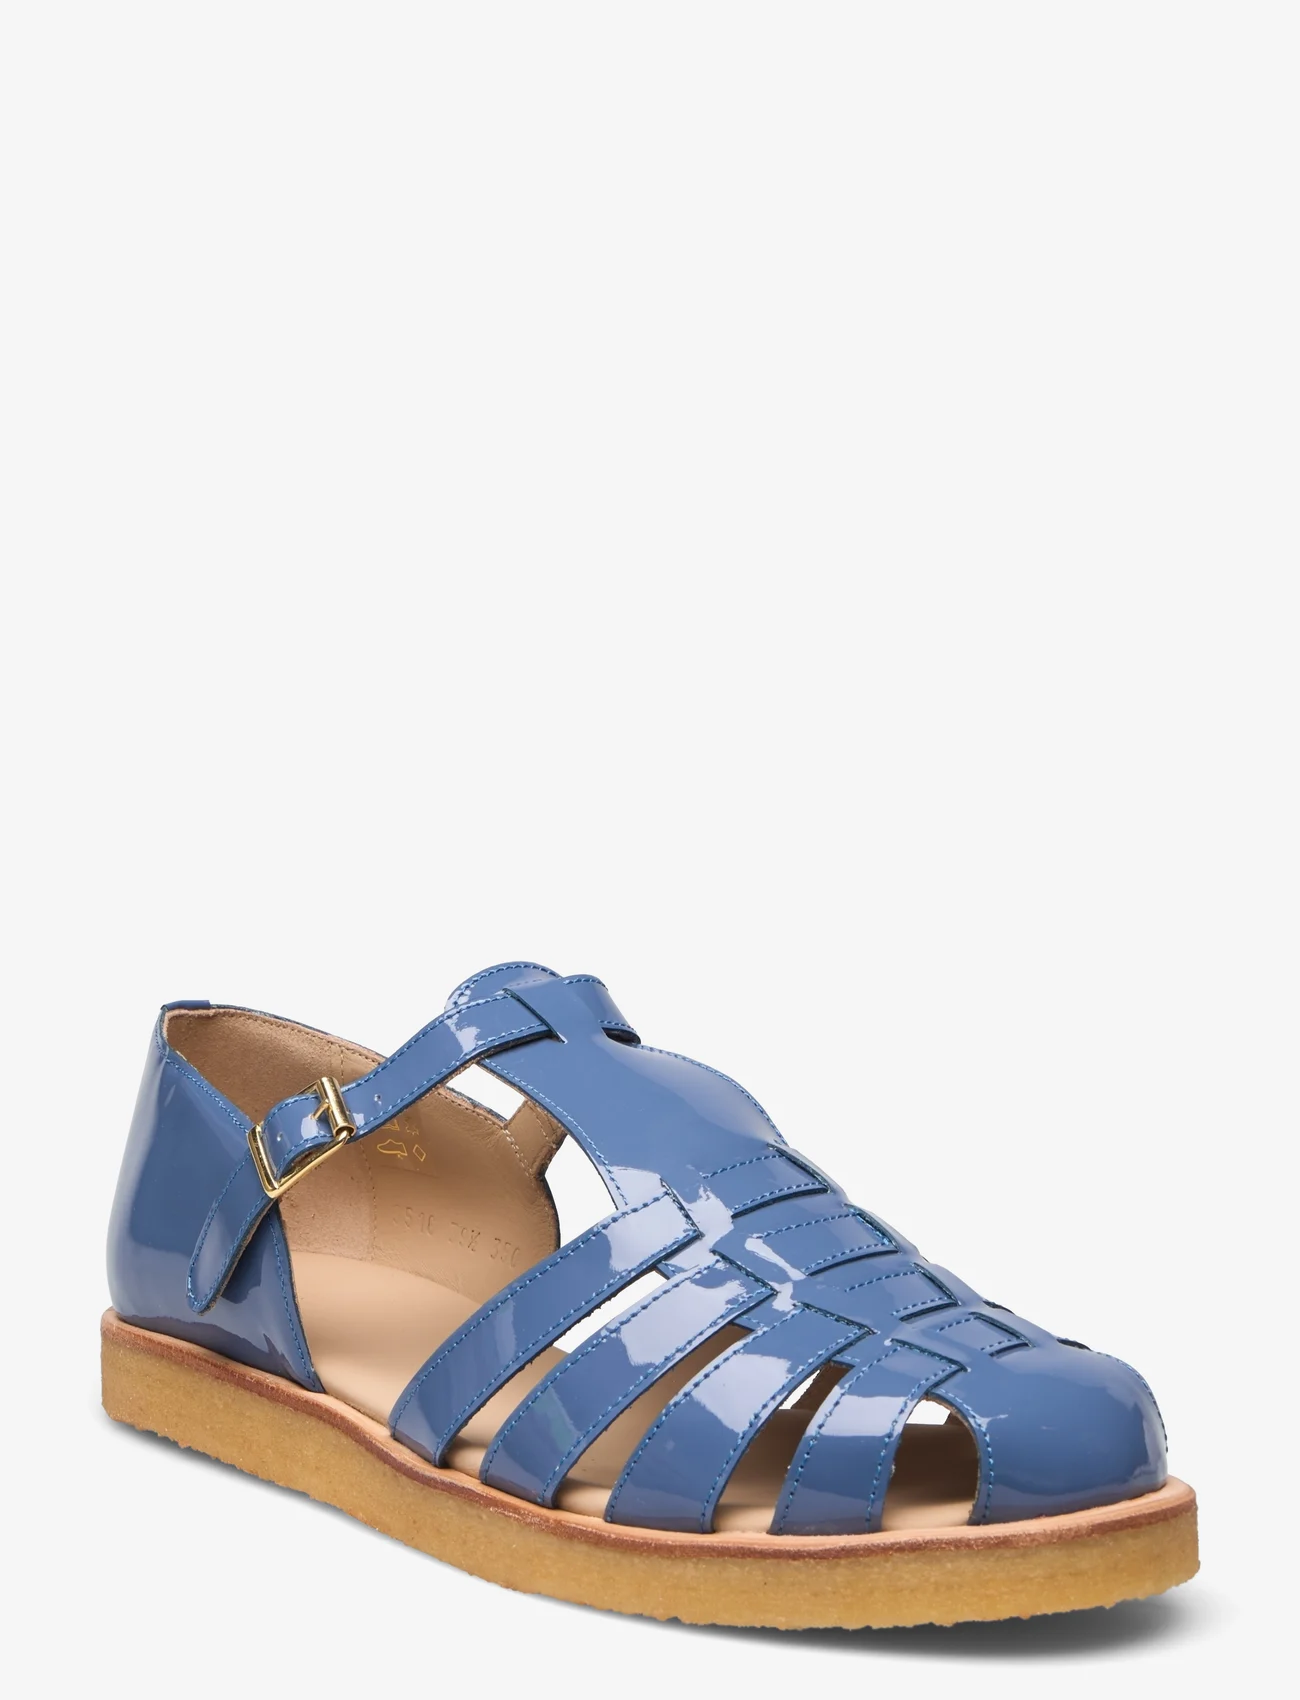 ANGULUS - Sandals - flat - closed toe - op - flade sandaler - 2806 dusty blue - 1